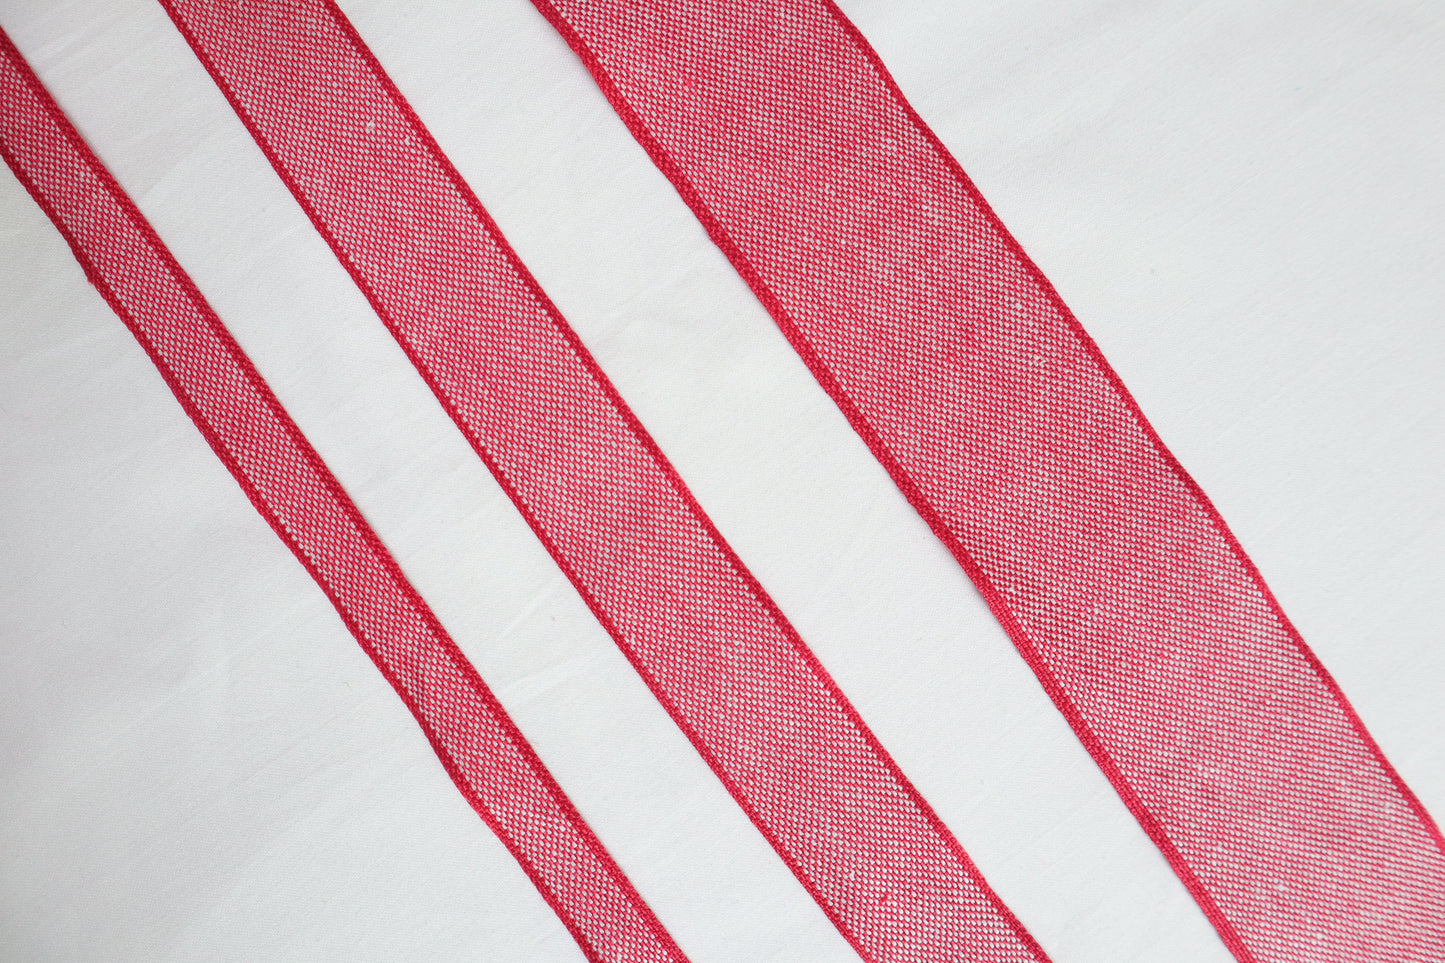 30mm stripe ribbon/ tape in 100% washed linen